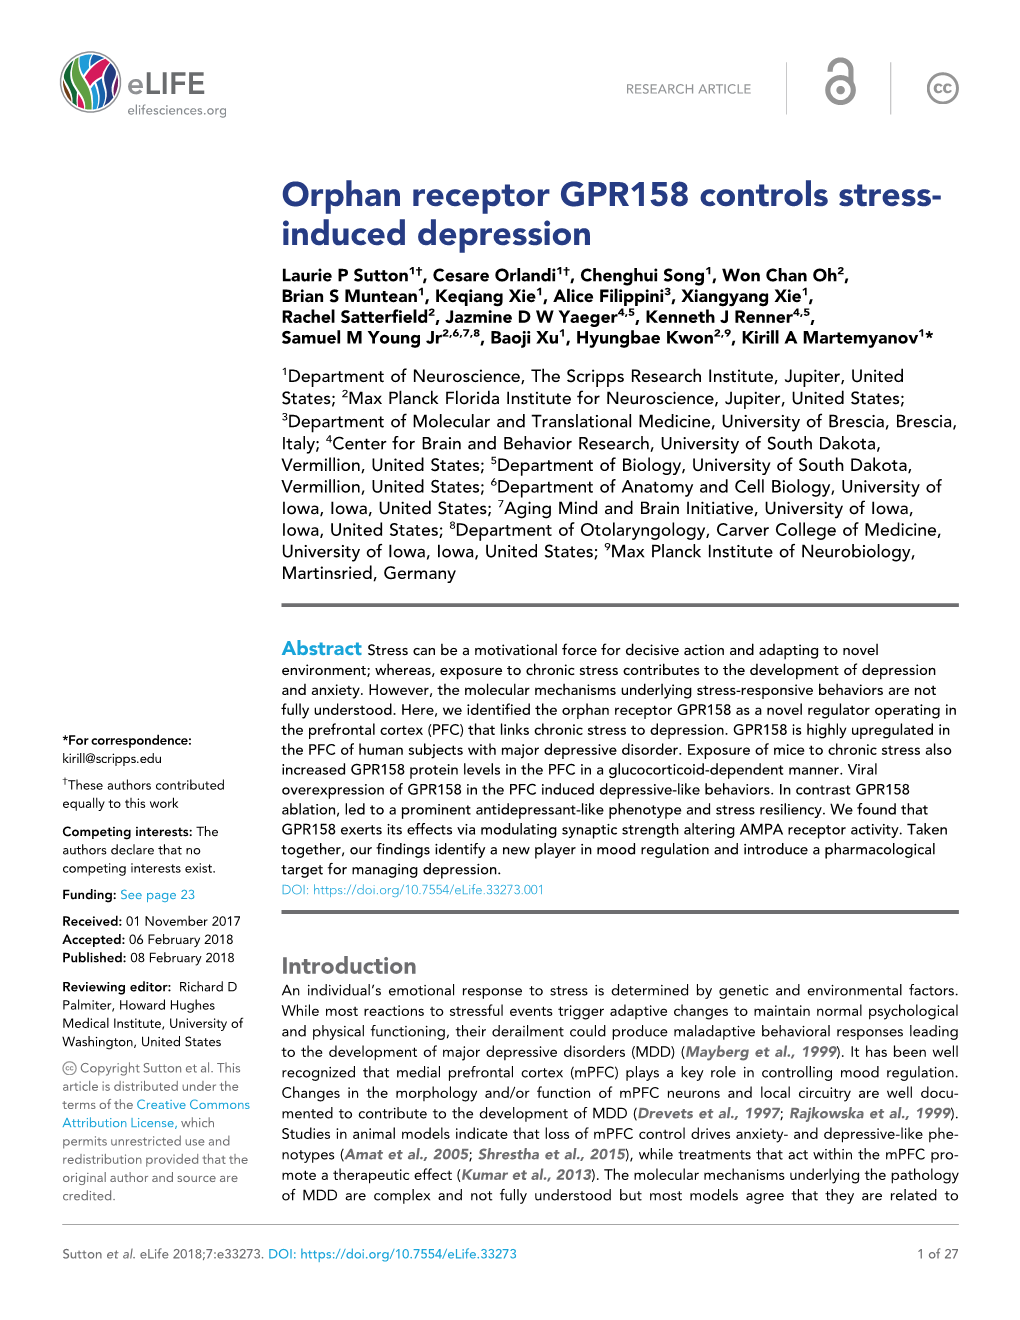 Orphan Receptor GPR158 Controls Stress- Induced Depression